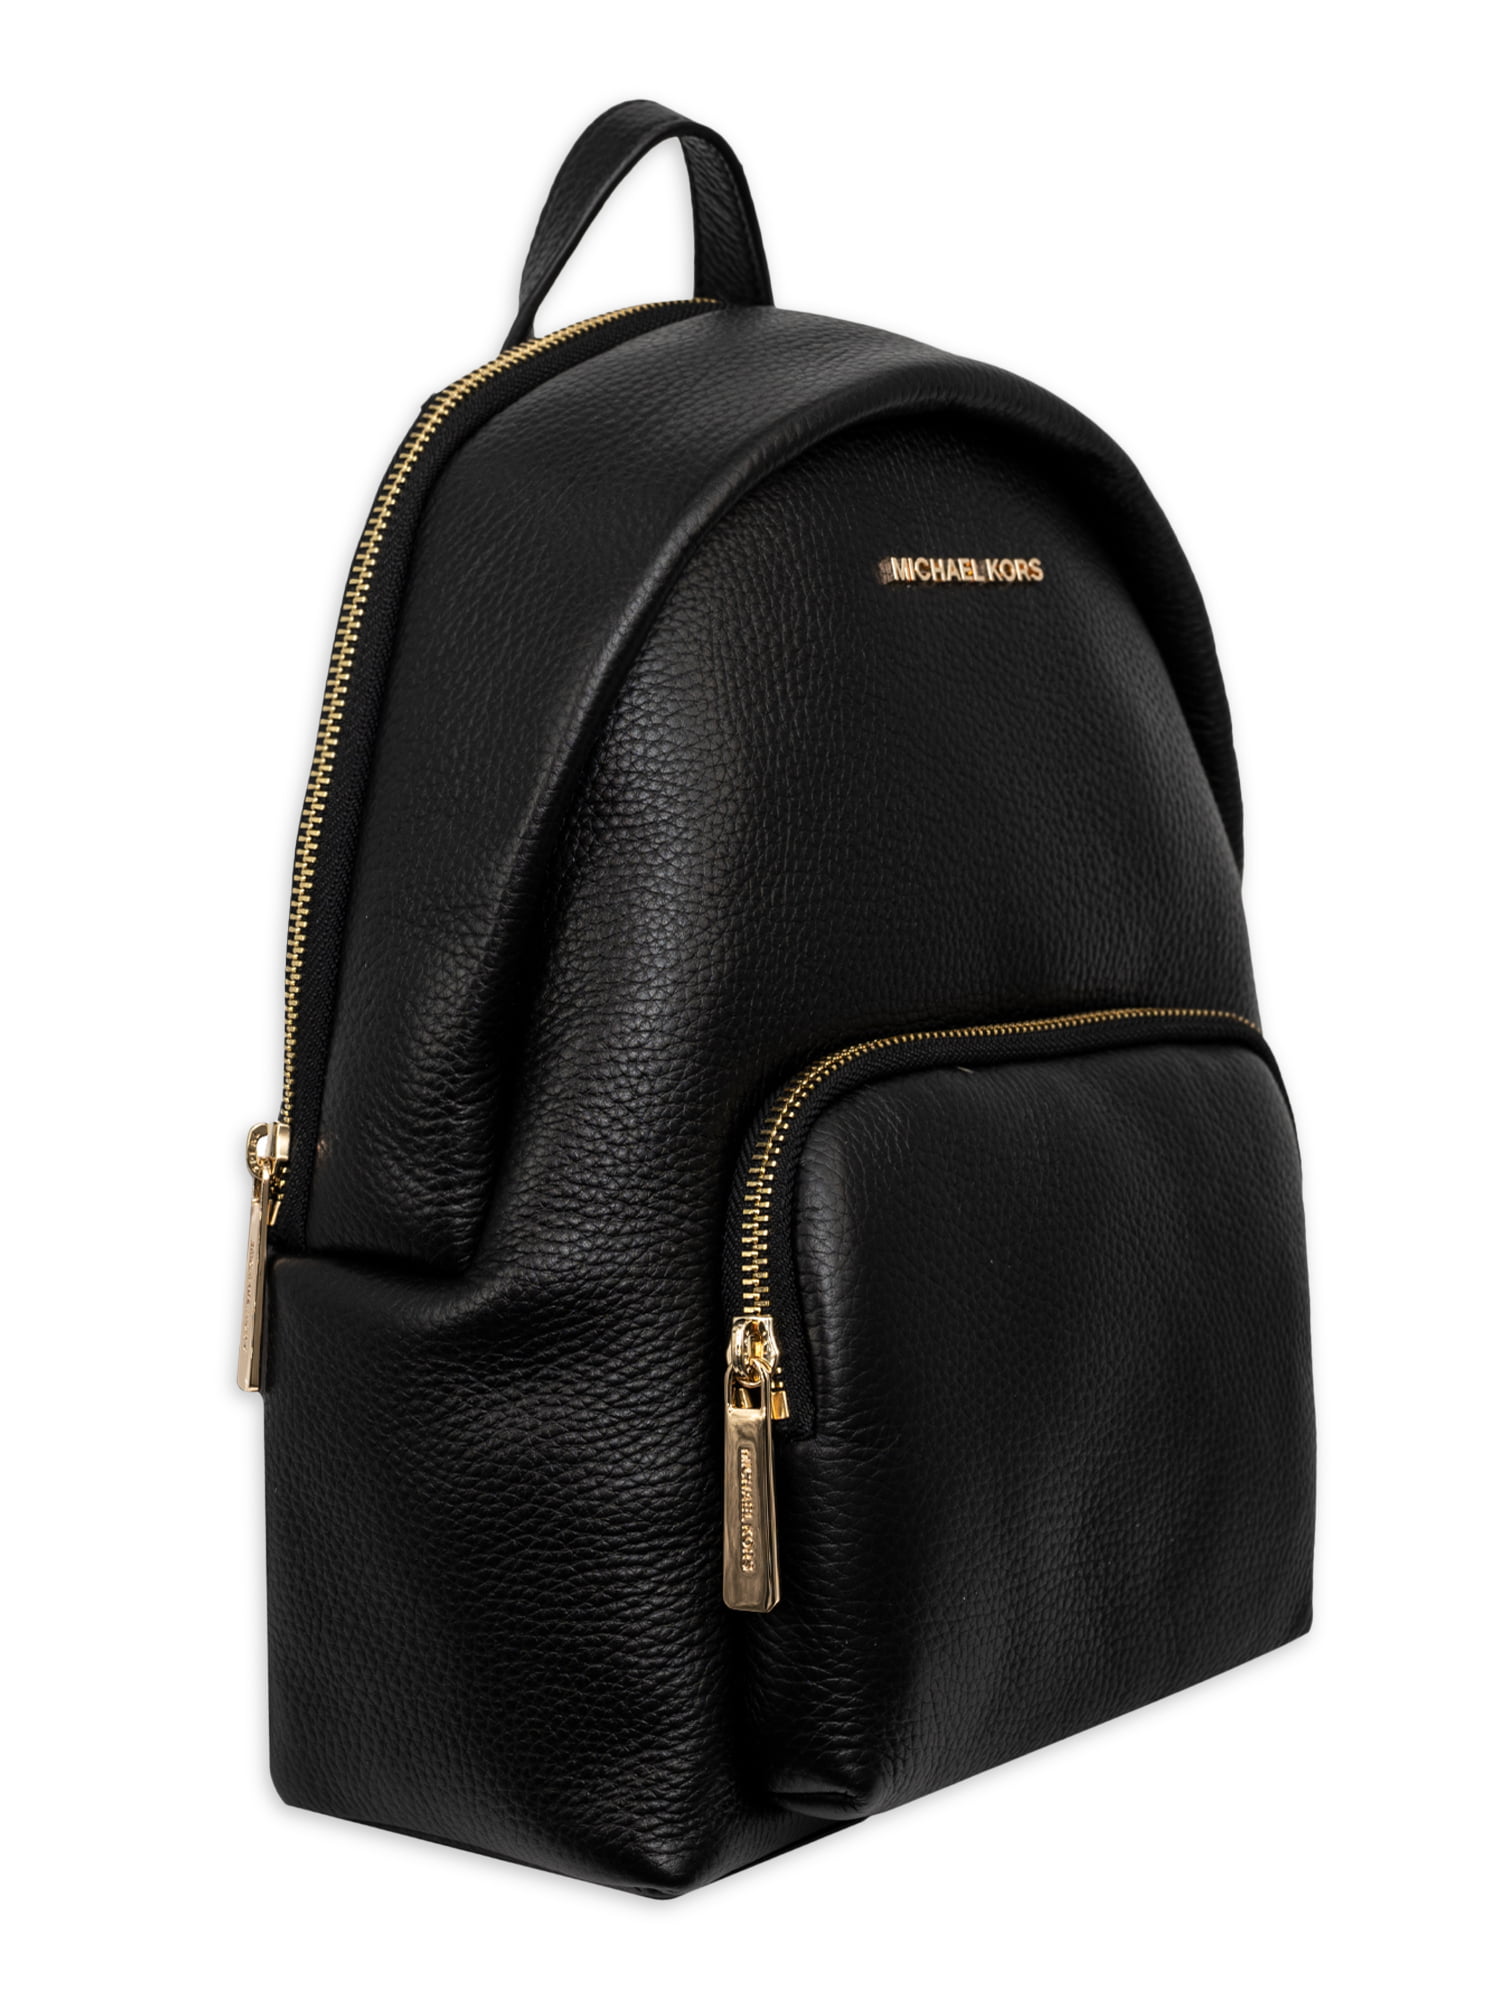 Michael Kors Women's Erin Medium Pebbled Leather Backpack - Black 